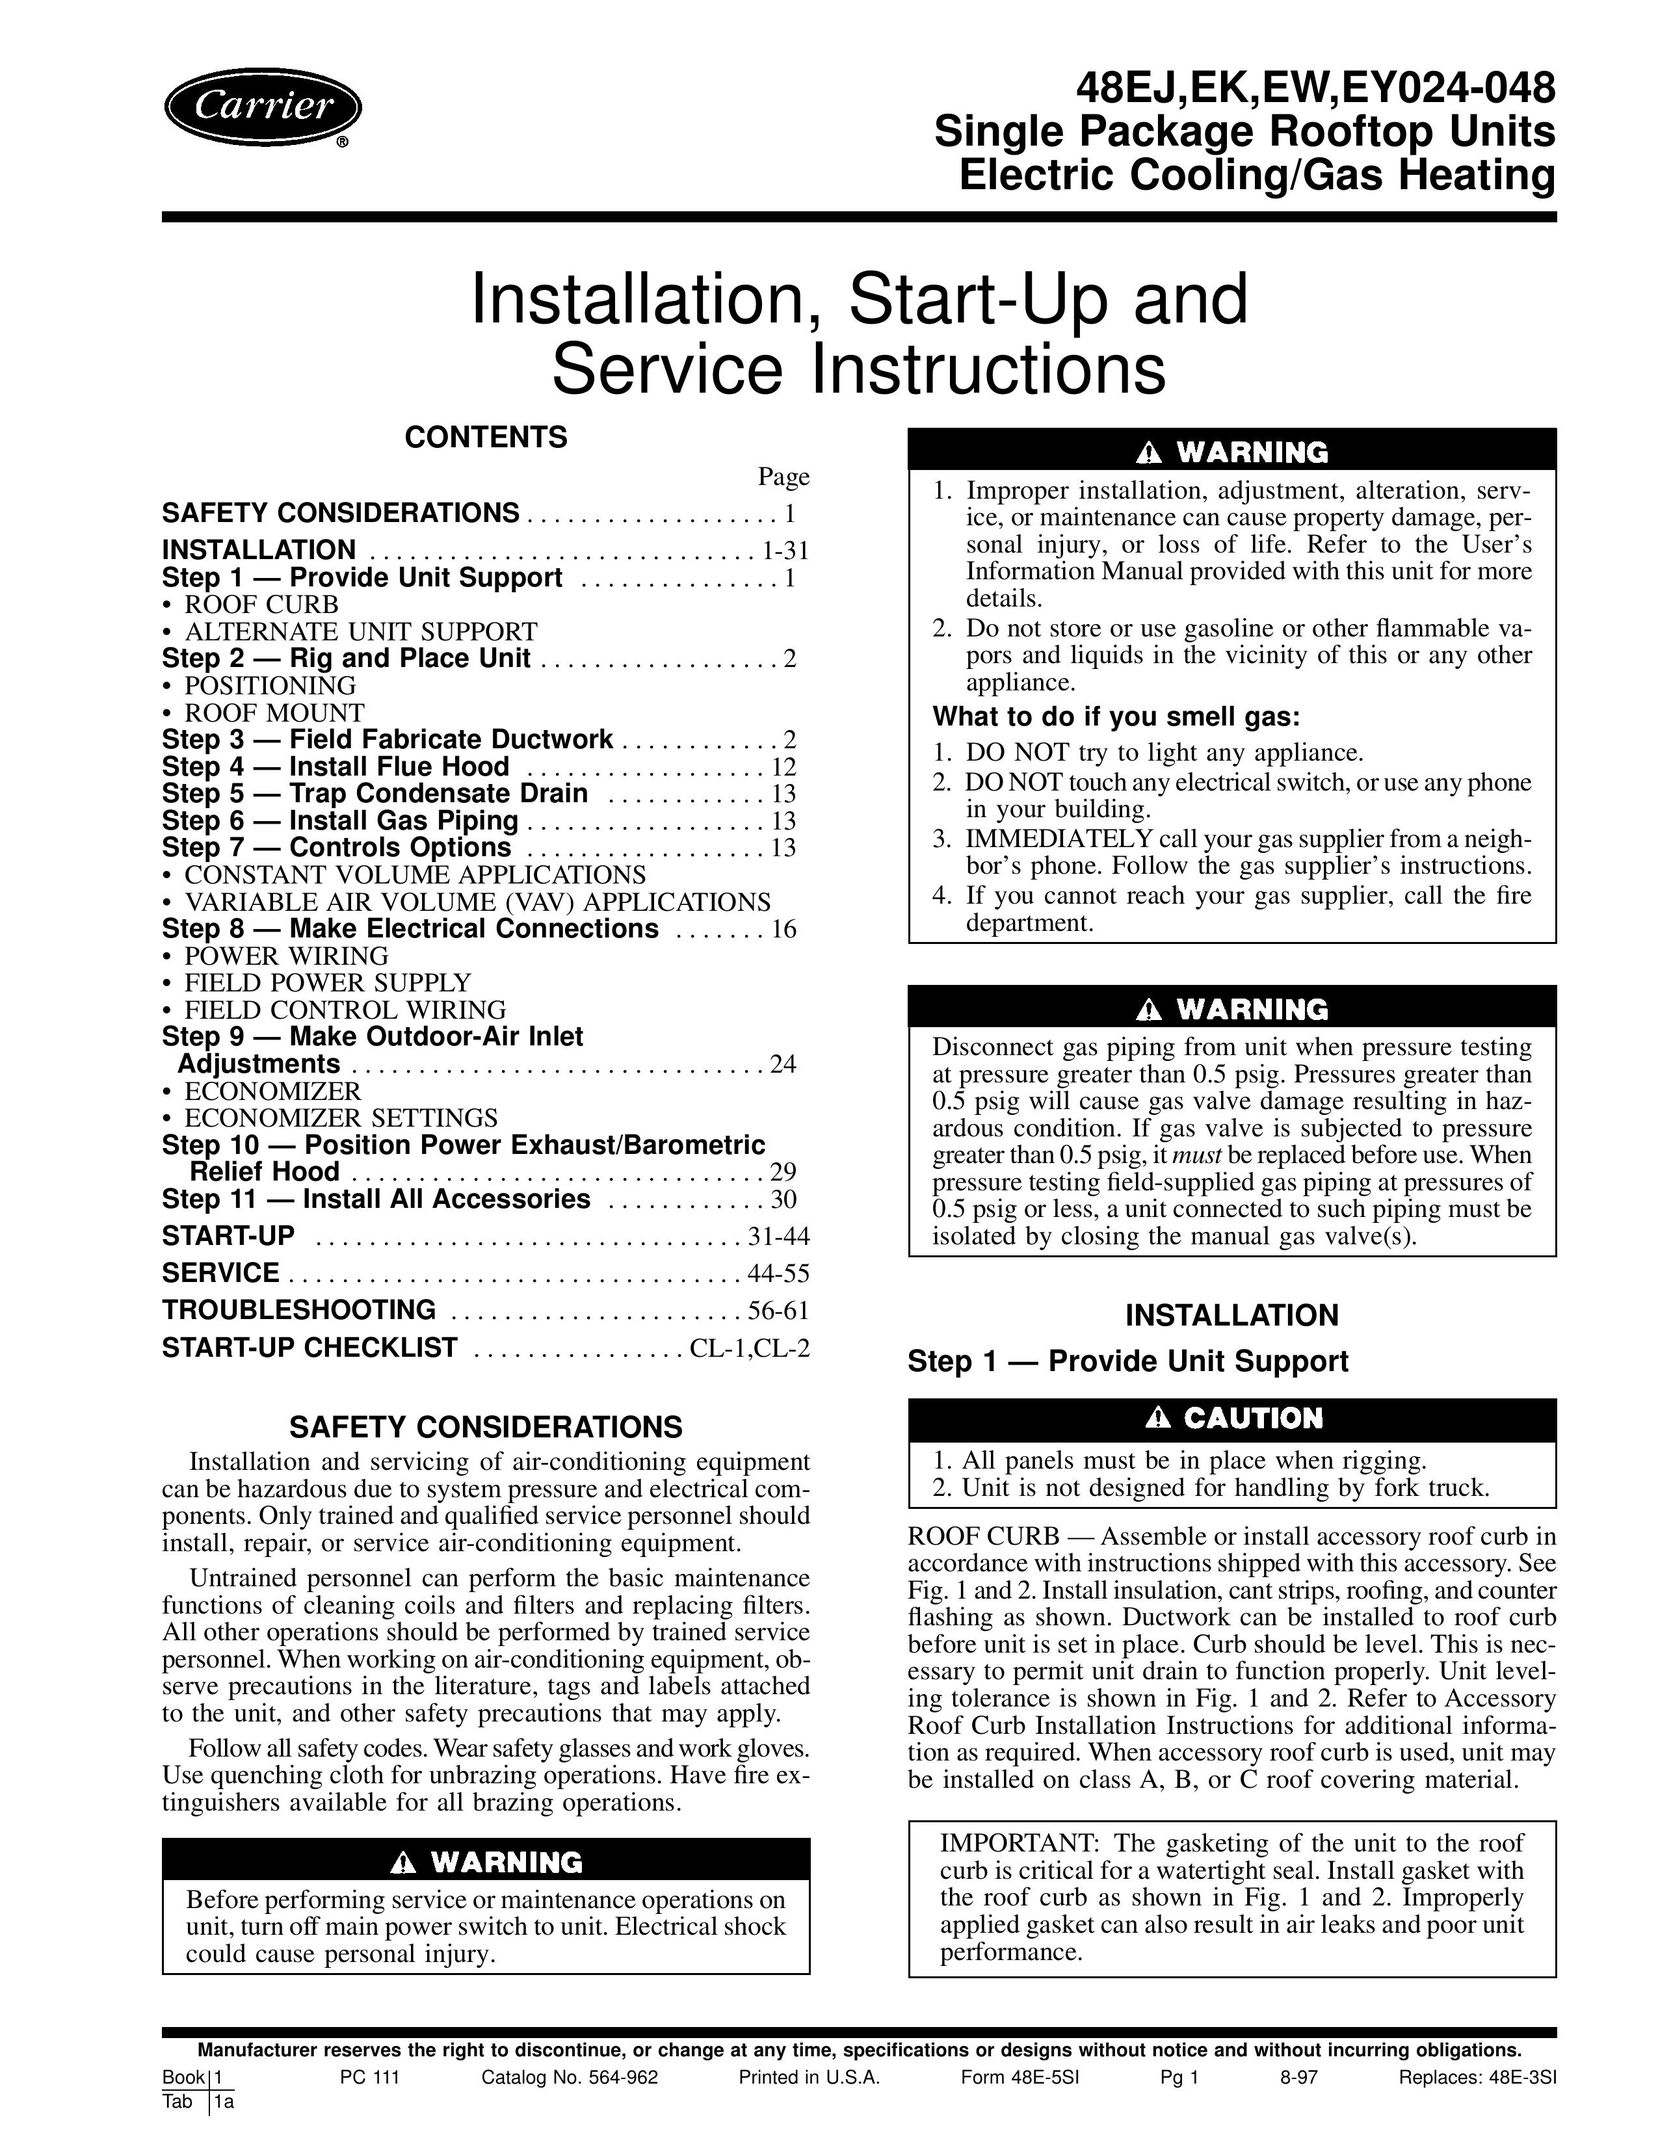 Carrier EK Gas Heater User Manual